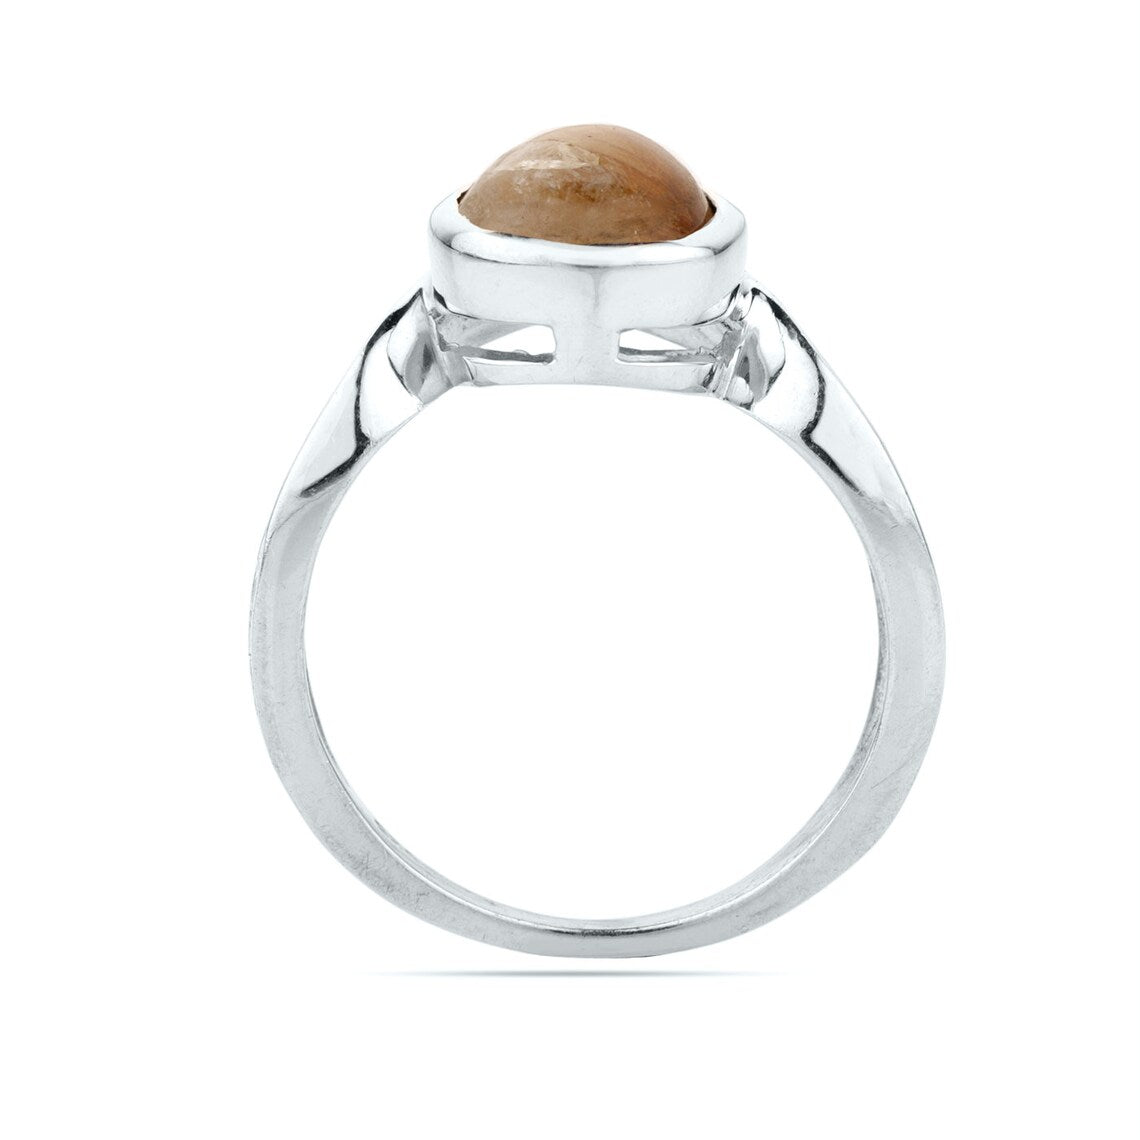 Golden Rutile Ring, Silver Handmade Ring, Rutilated Quartz Ring, Golden Rutilated Quartz Engagement Ring